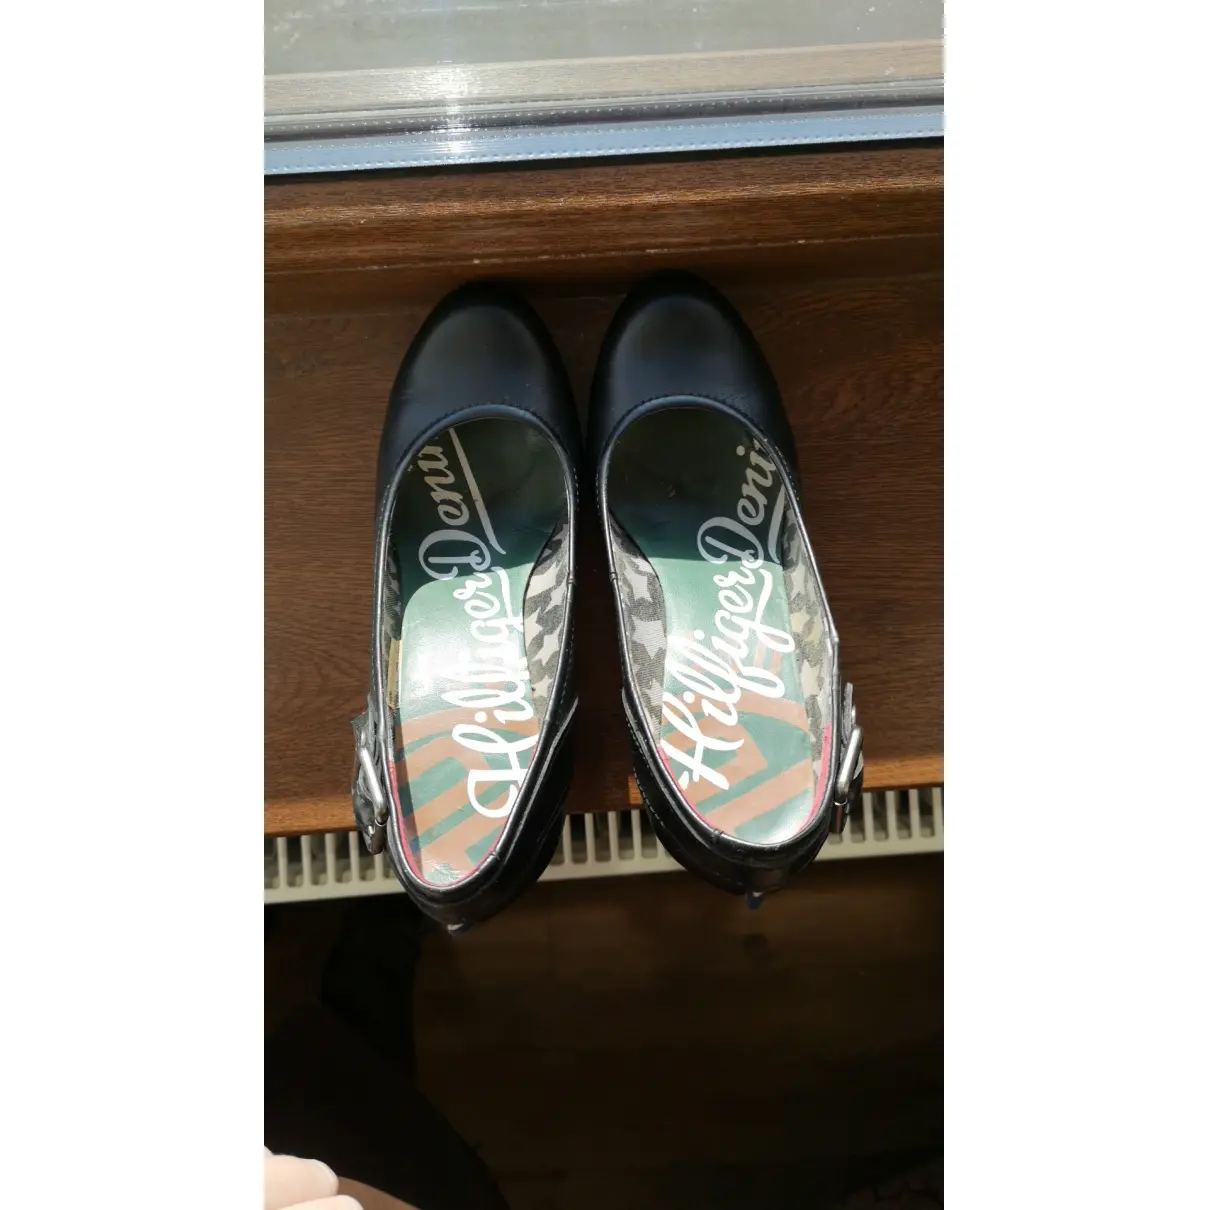 Buy Tommy Hilfiger Leather heels online